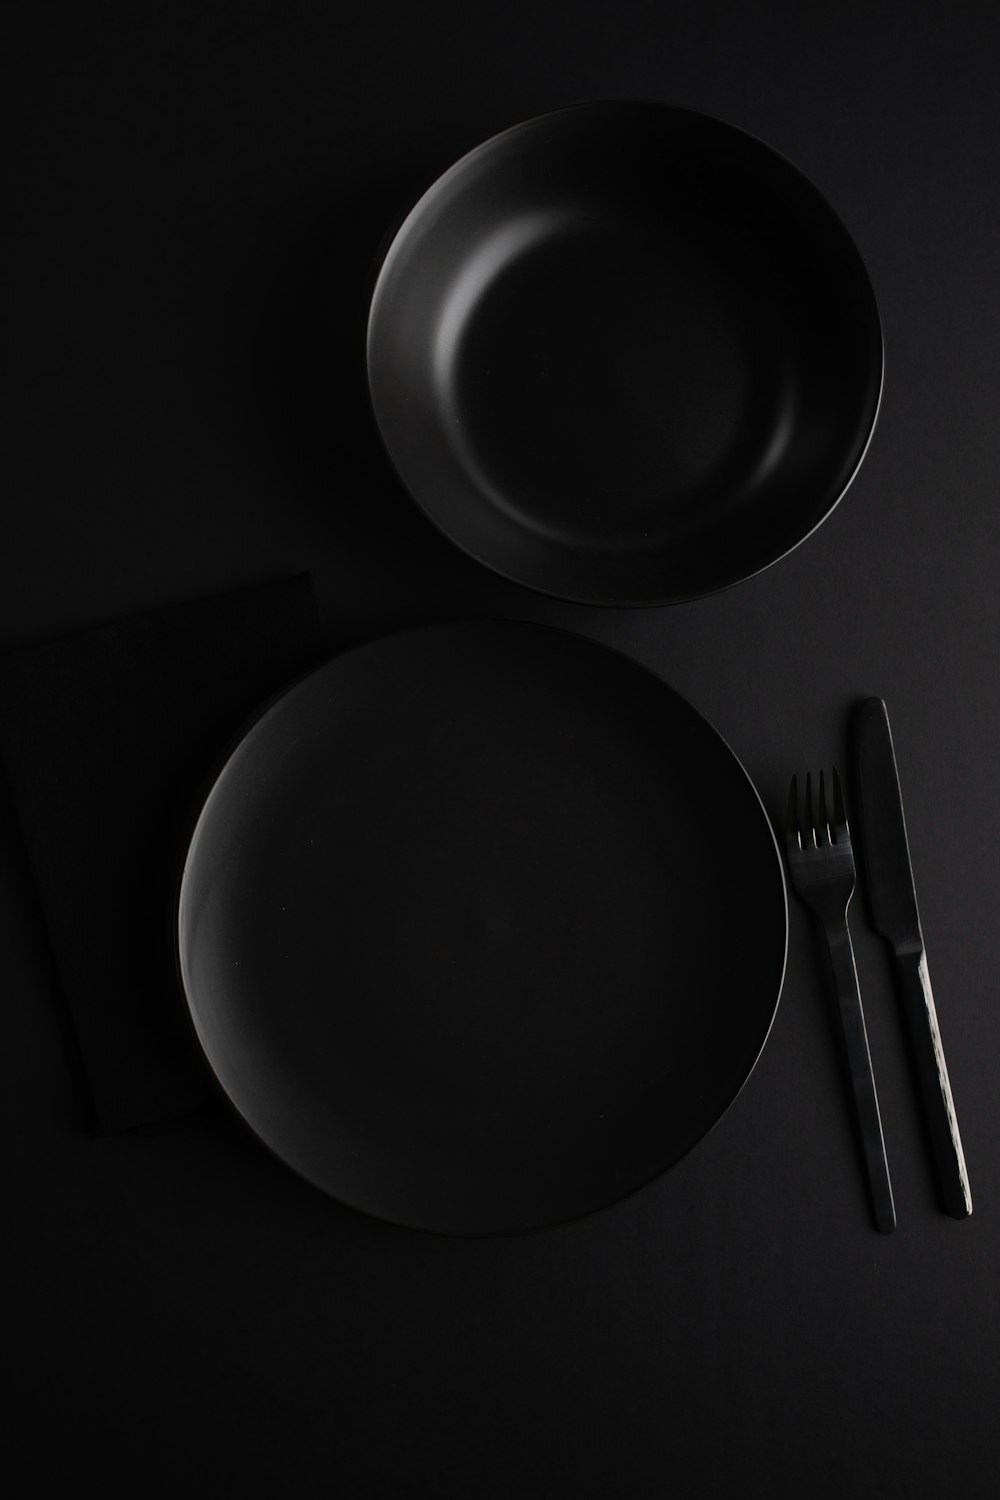 grey and black ceramic plate